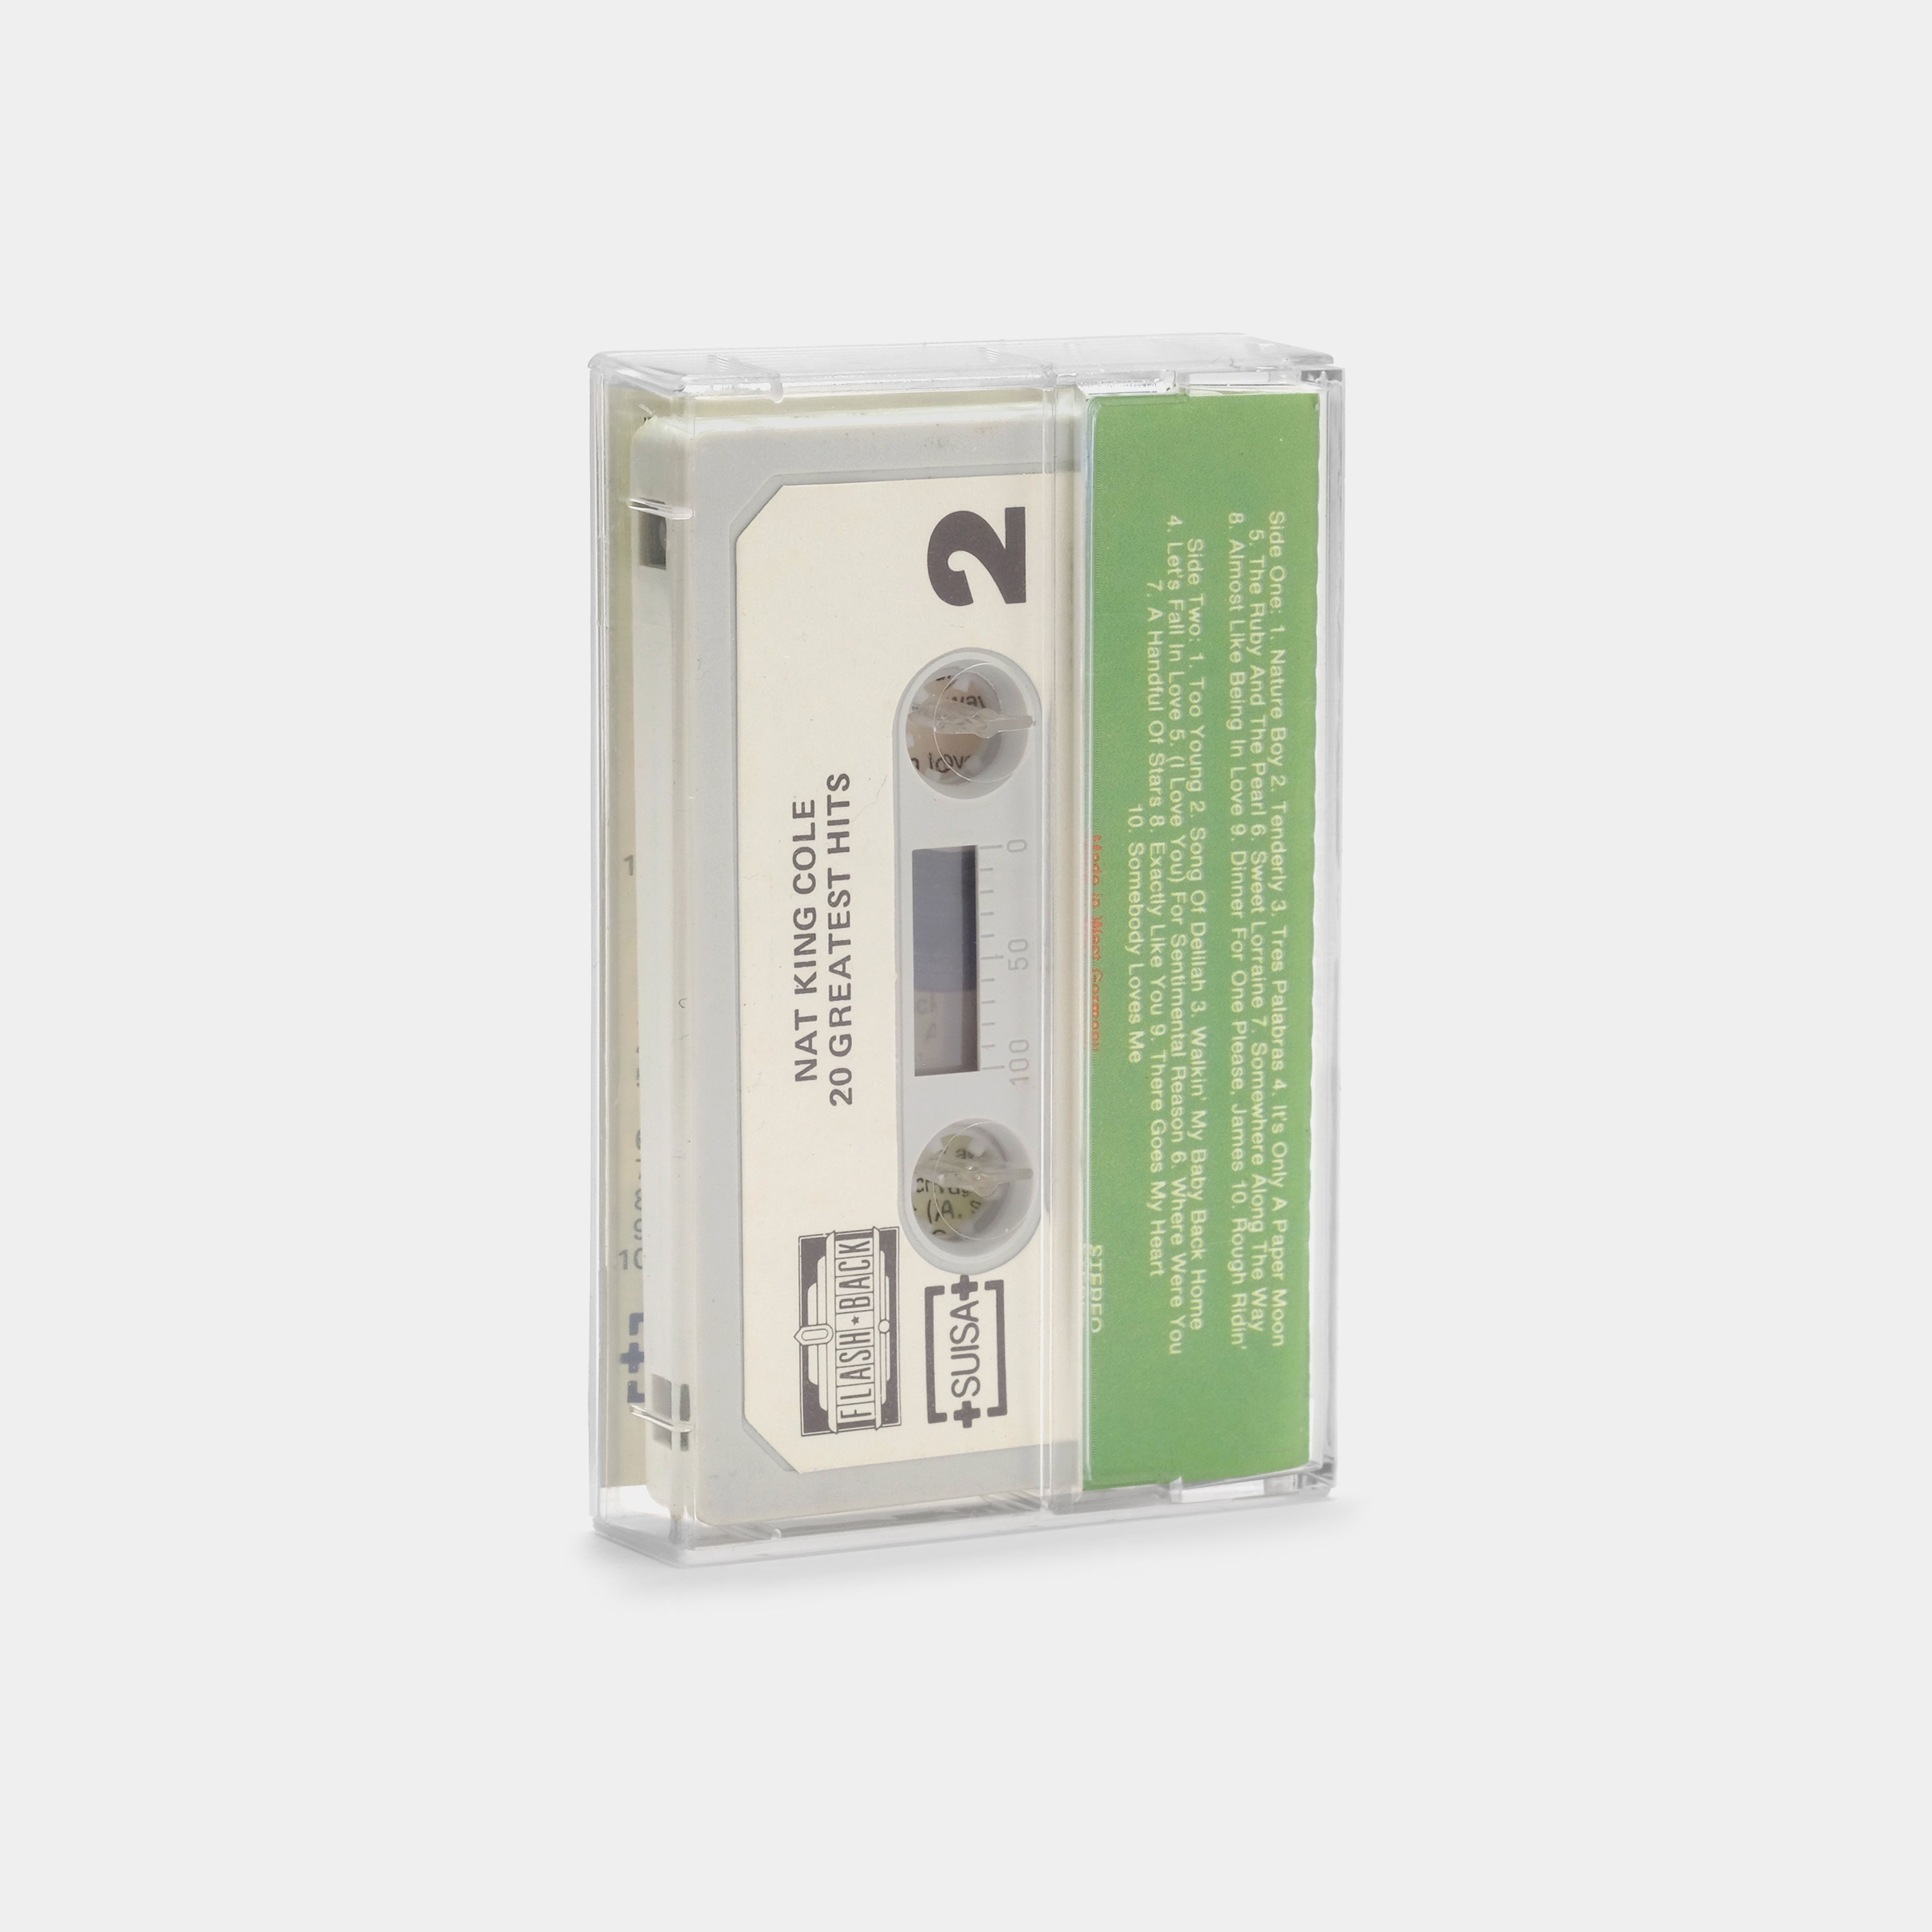 Nat King Cole - 20 Greatest Hits, Vol. 2 Cassette Tape